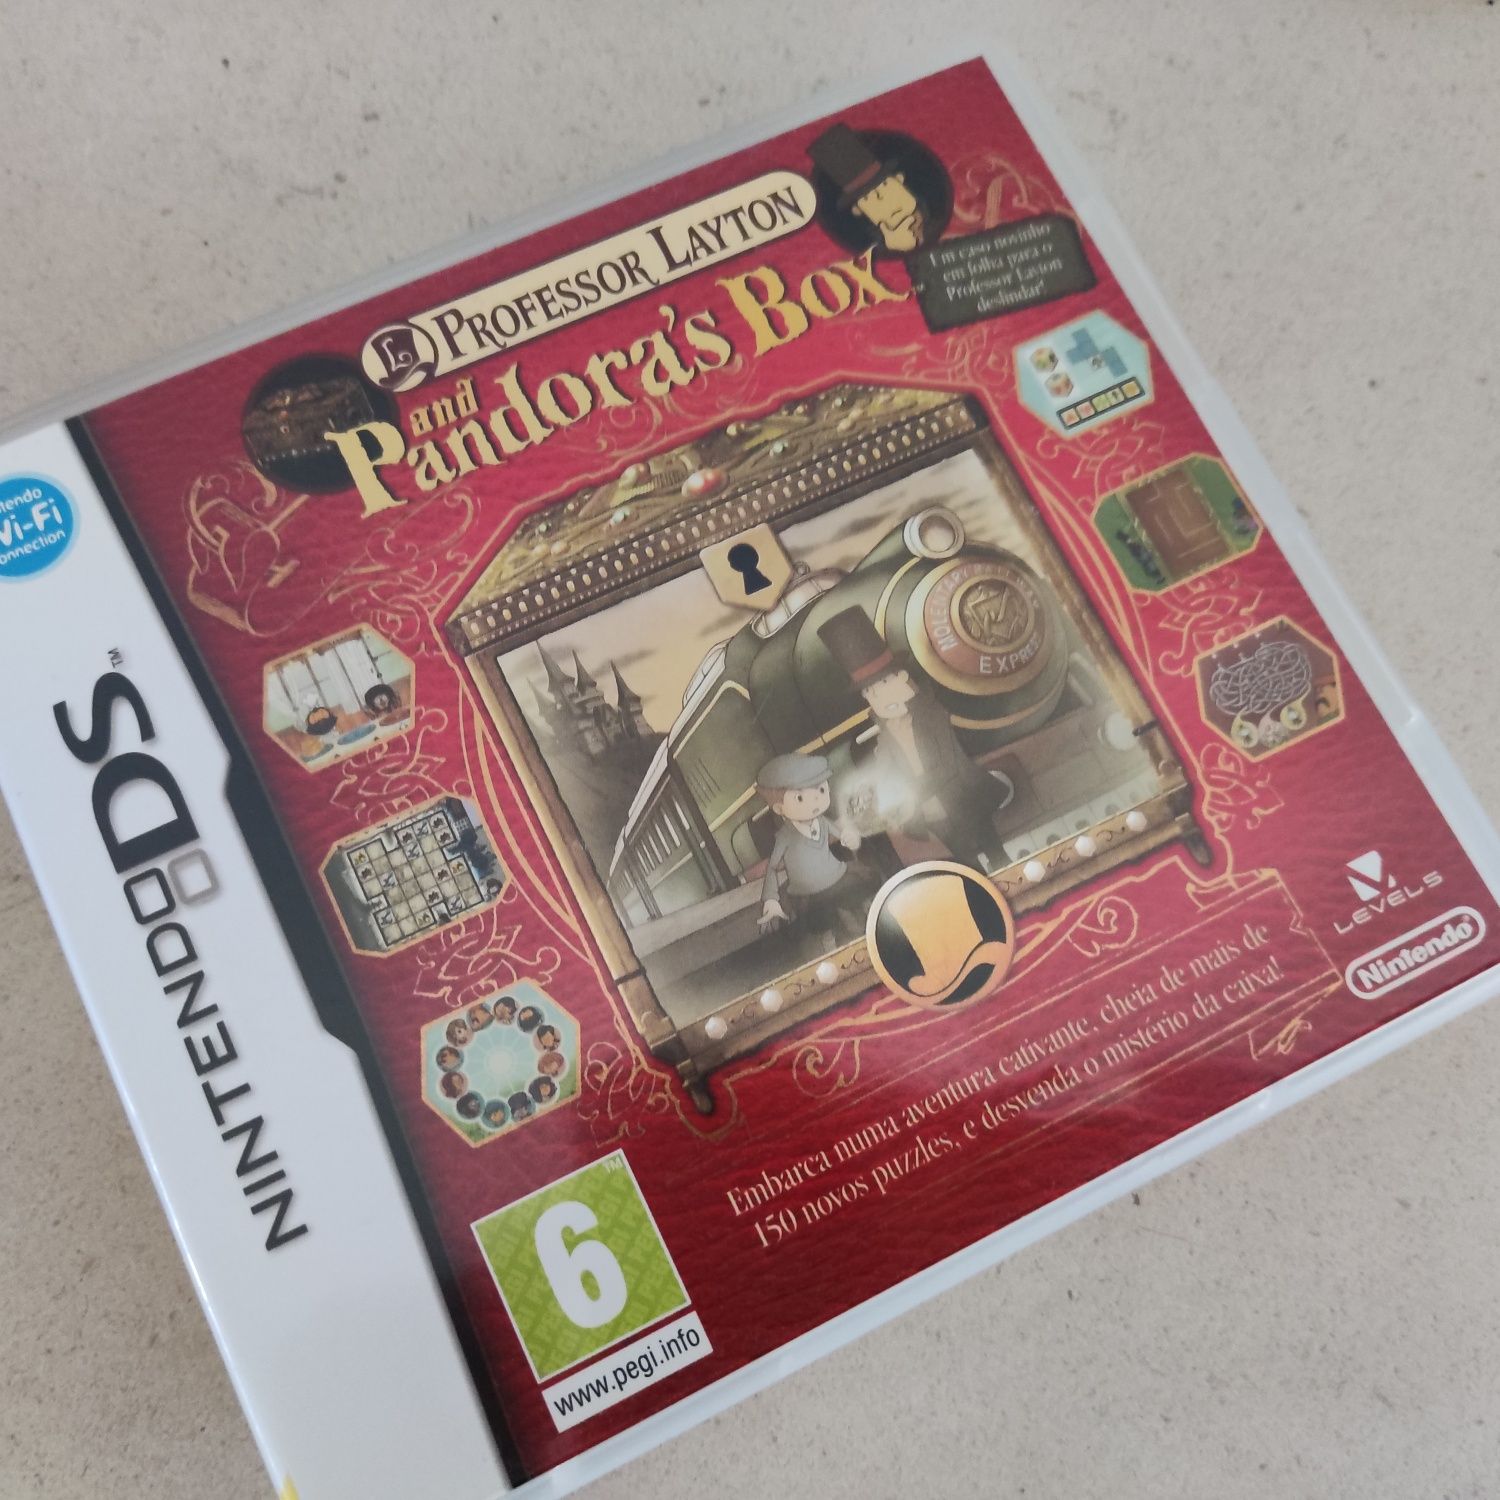 Professor Layton "and pandora´s box" - Nintendo DS